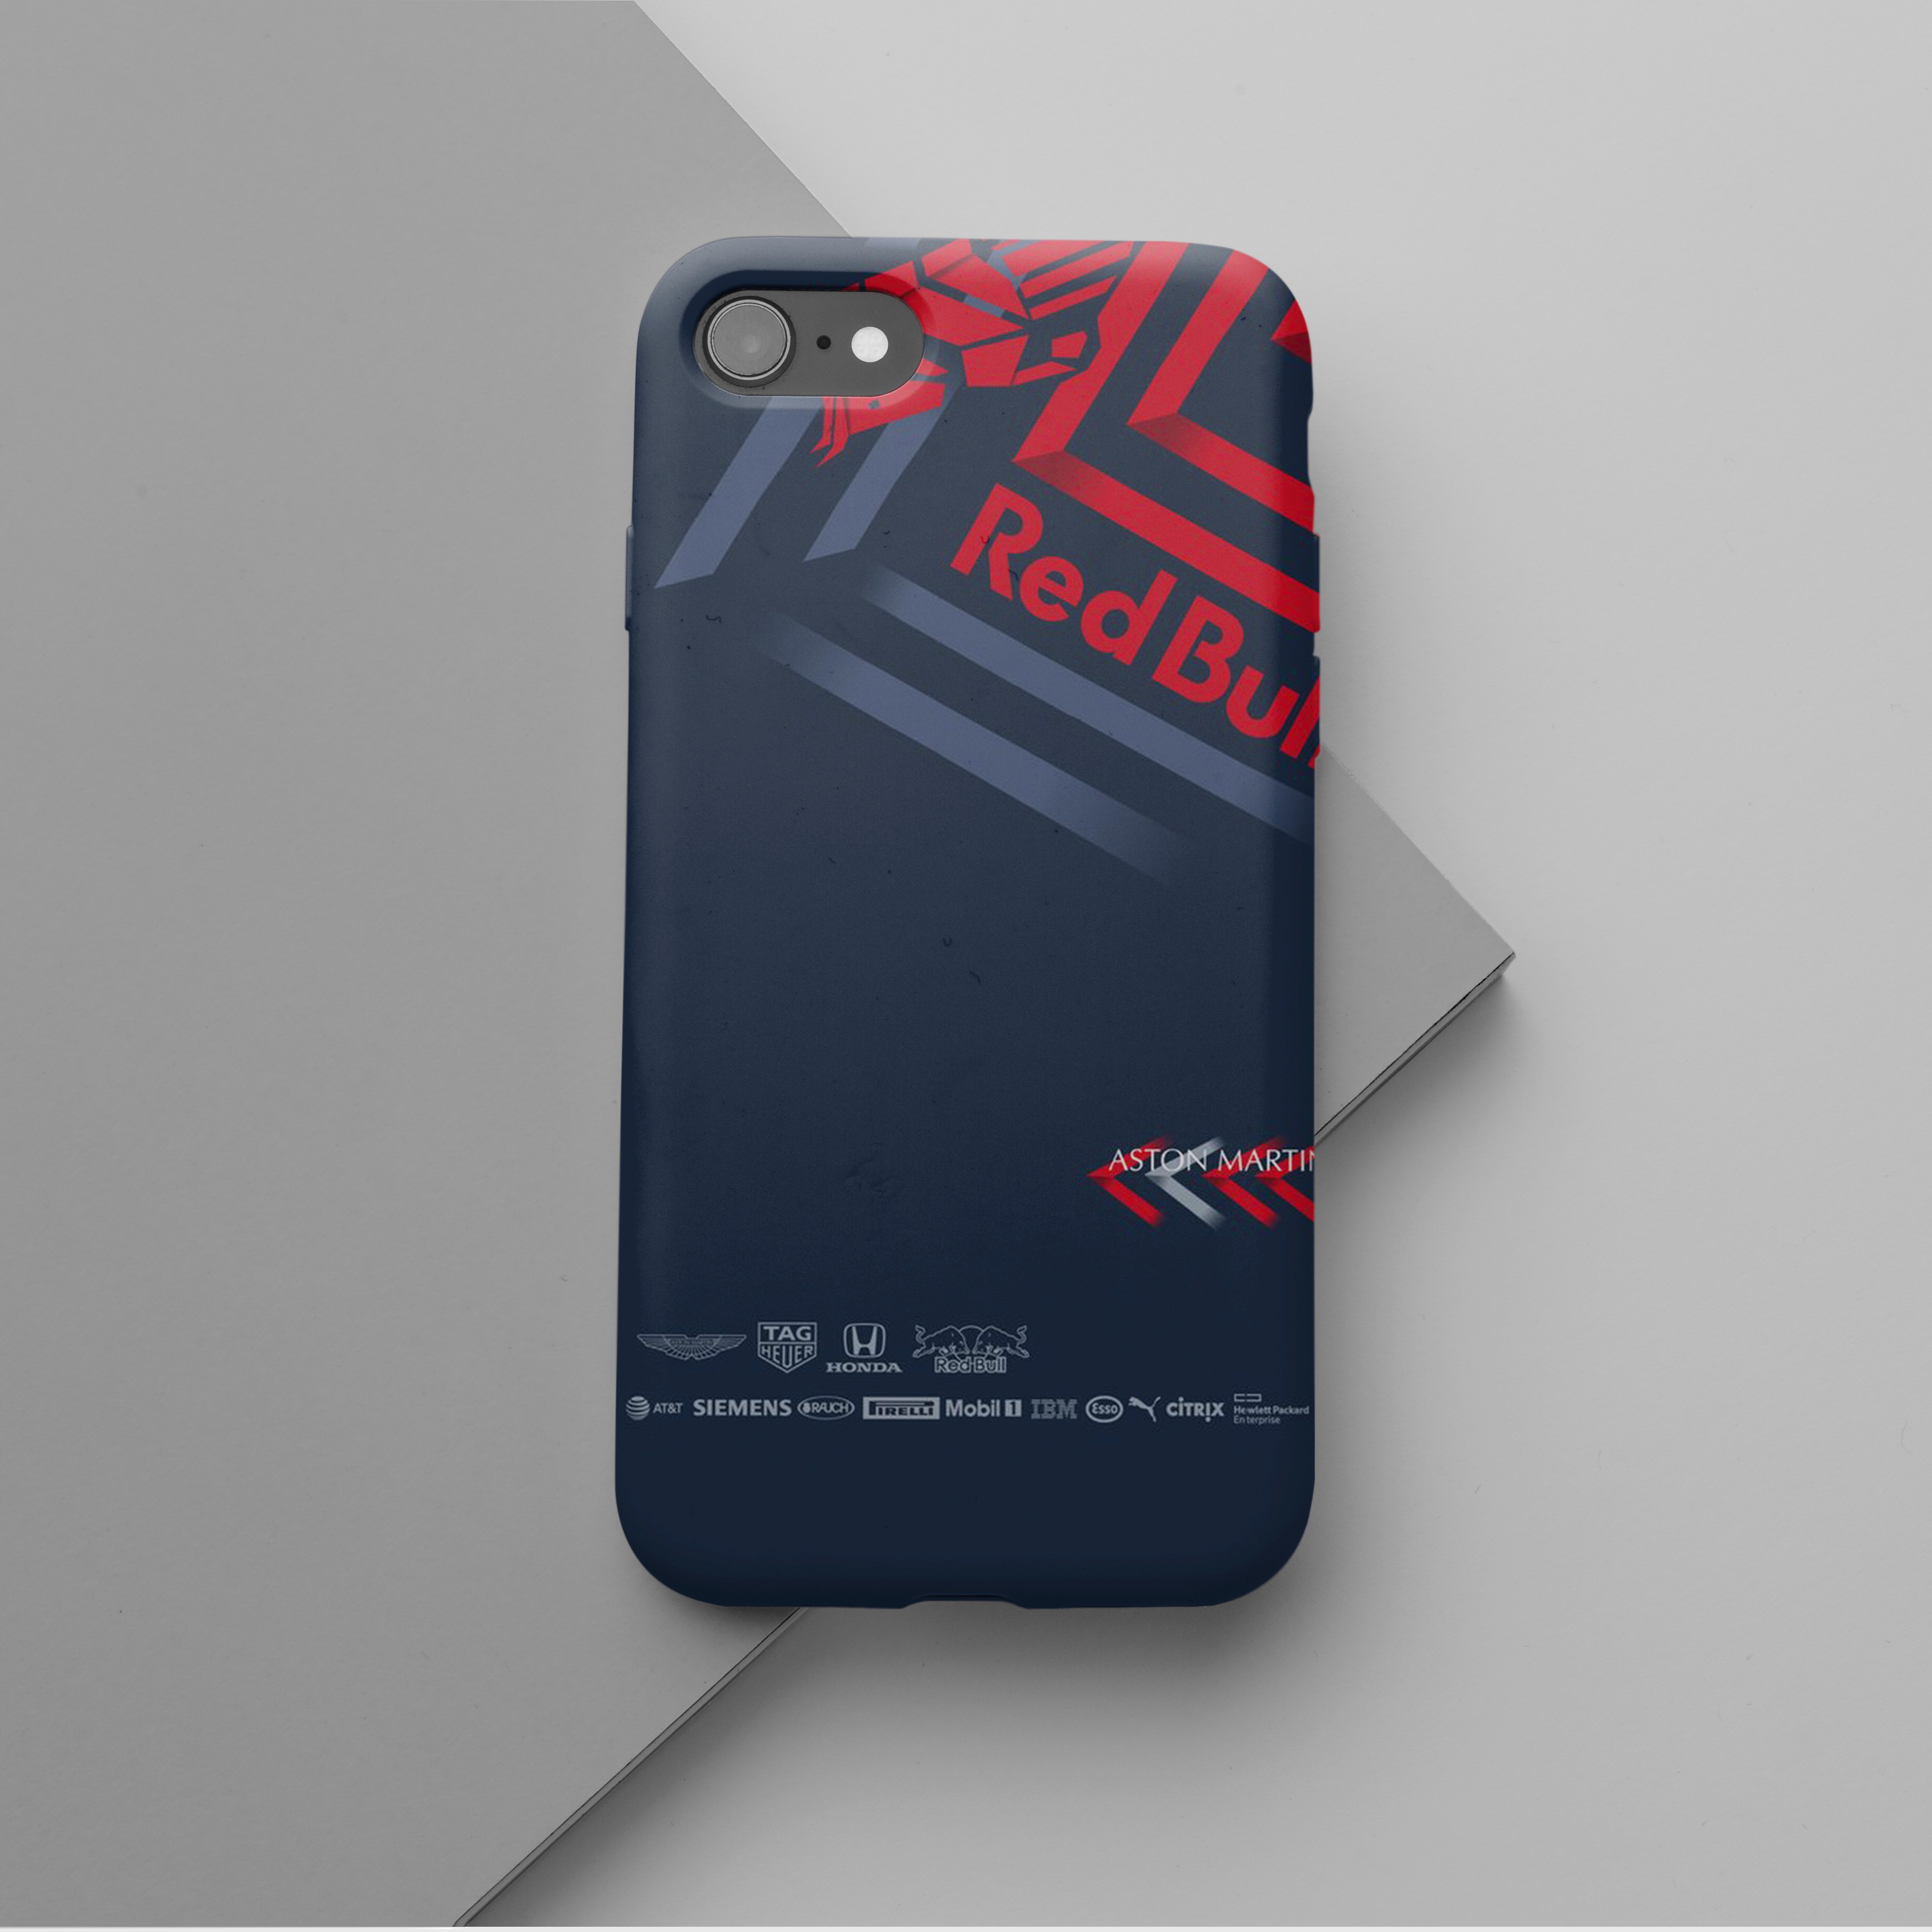 Red Bull Racing Telefon Kılıfı